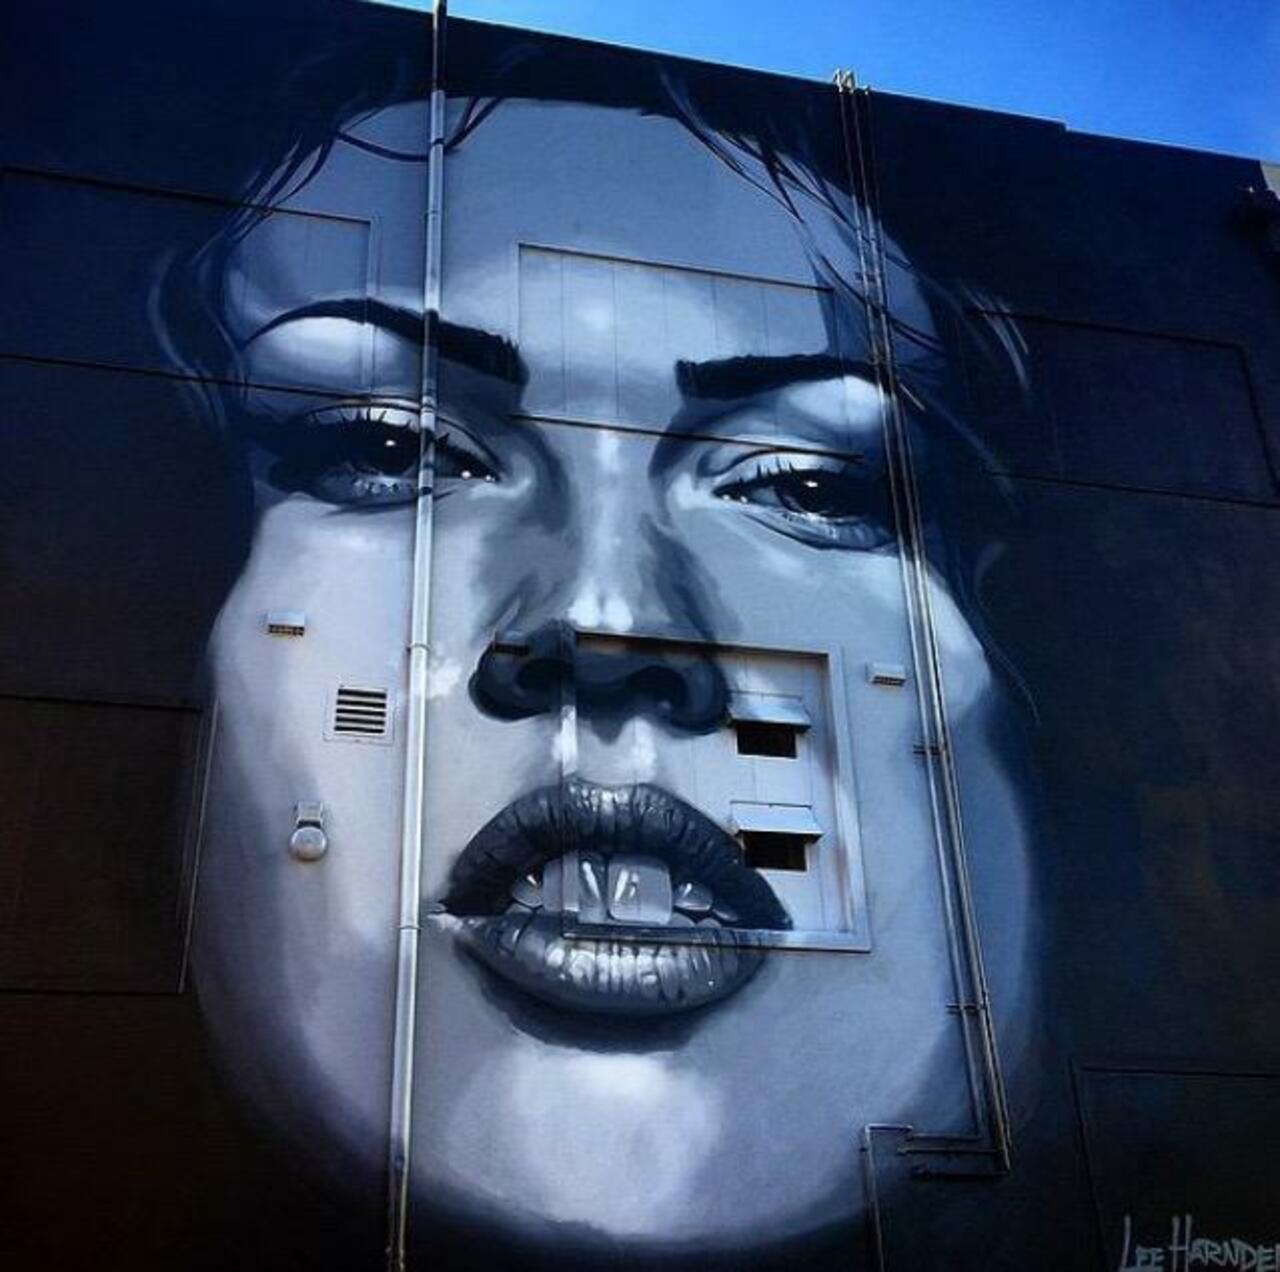 RT @GoogleStreetArt: Street Art by Irocka 

#art #graffiti #mural #streetart http://t.co/mR1cUbWe0C